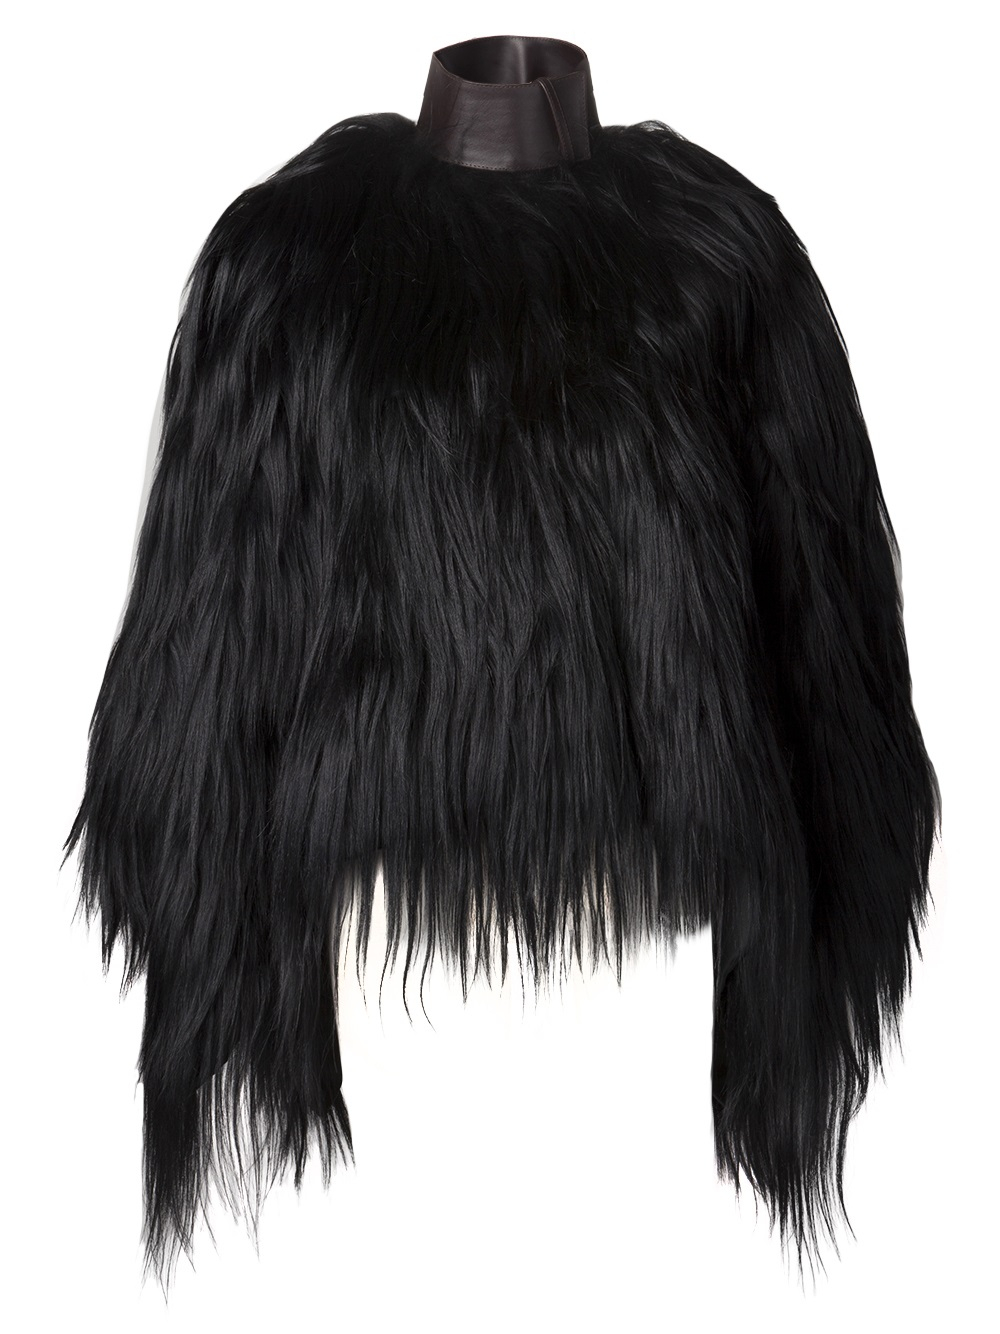 Givenchy Goat Fur Coat in Black - Lyst